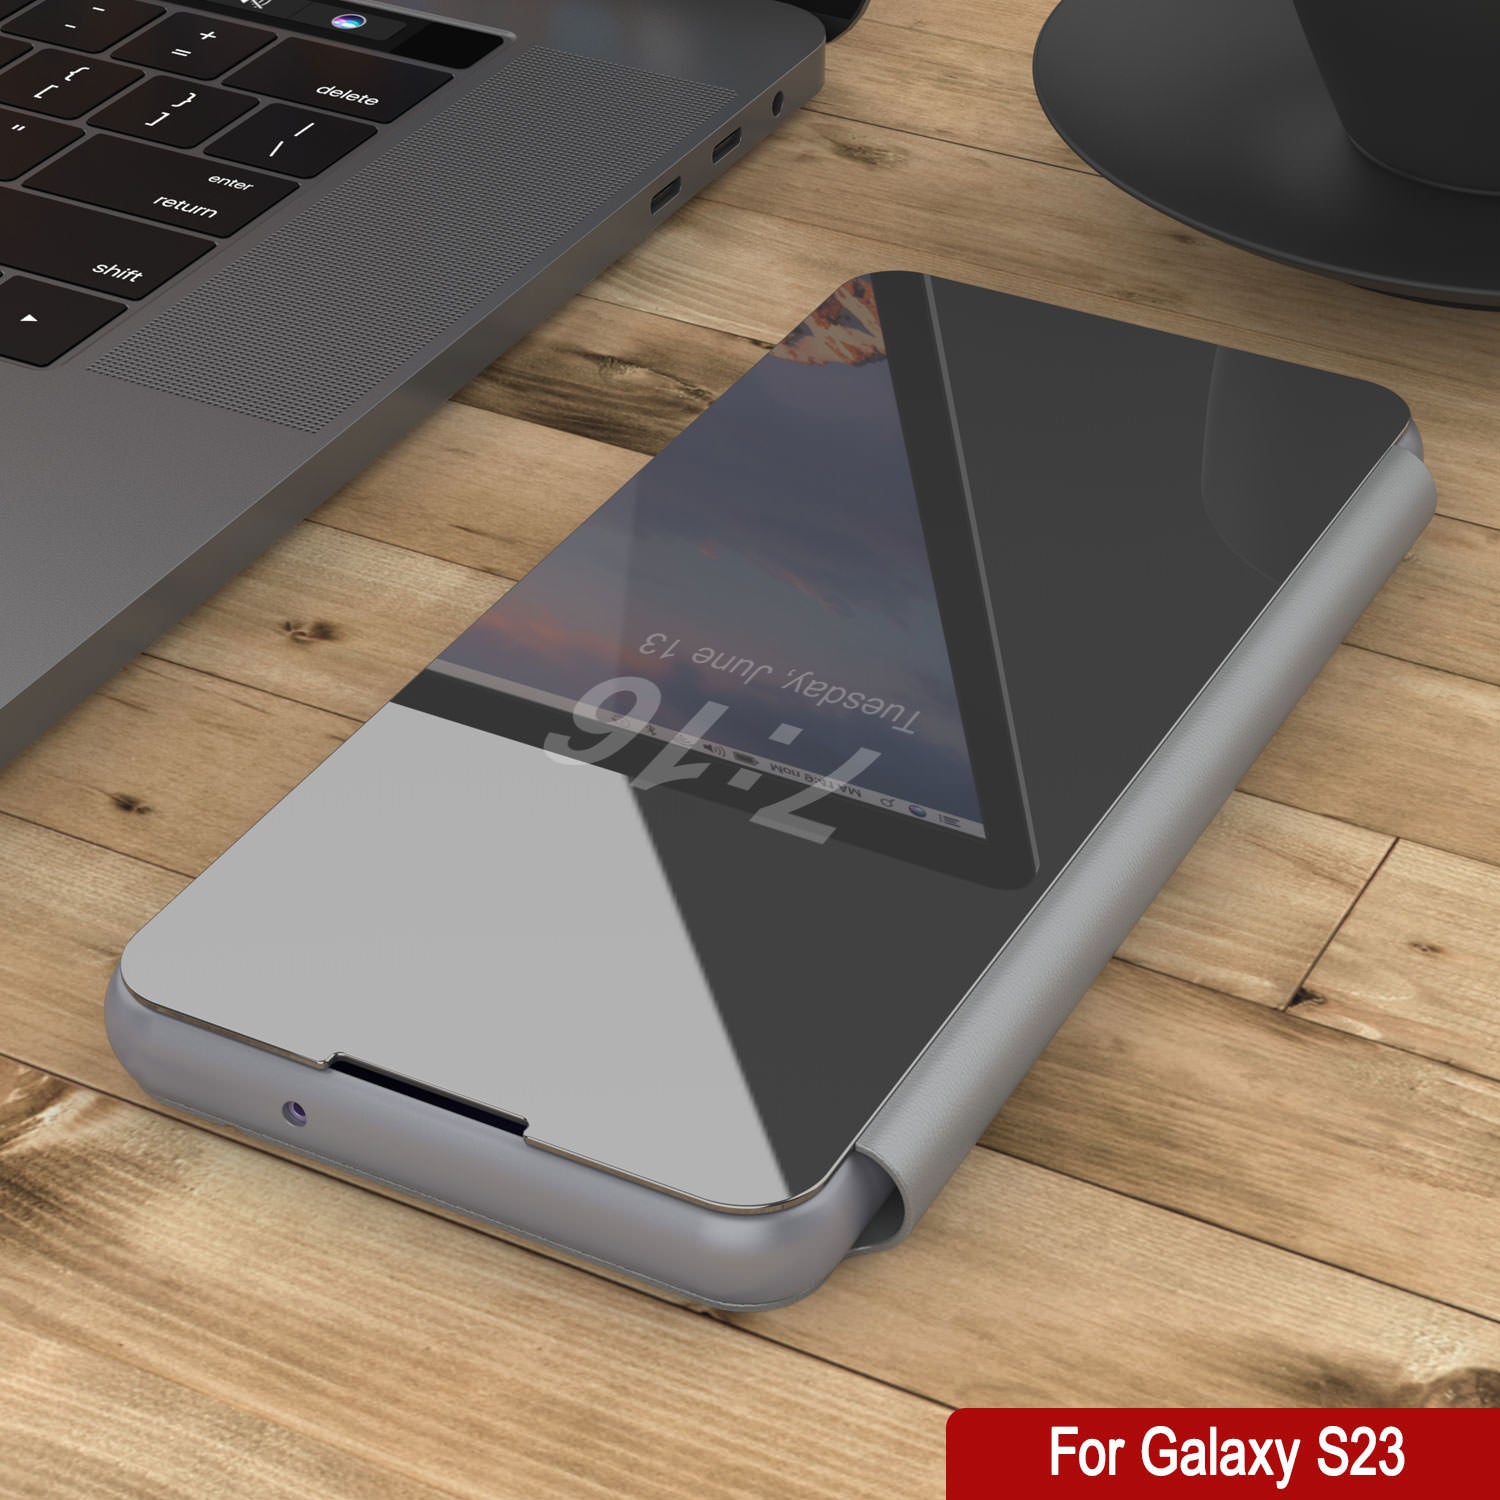 Punkcase Galaxy S23 Reflector Case Protective Flip Cover [Silver]